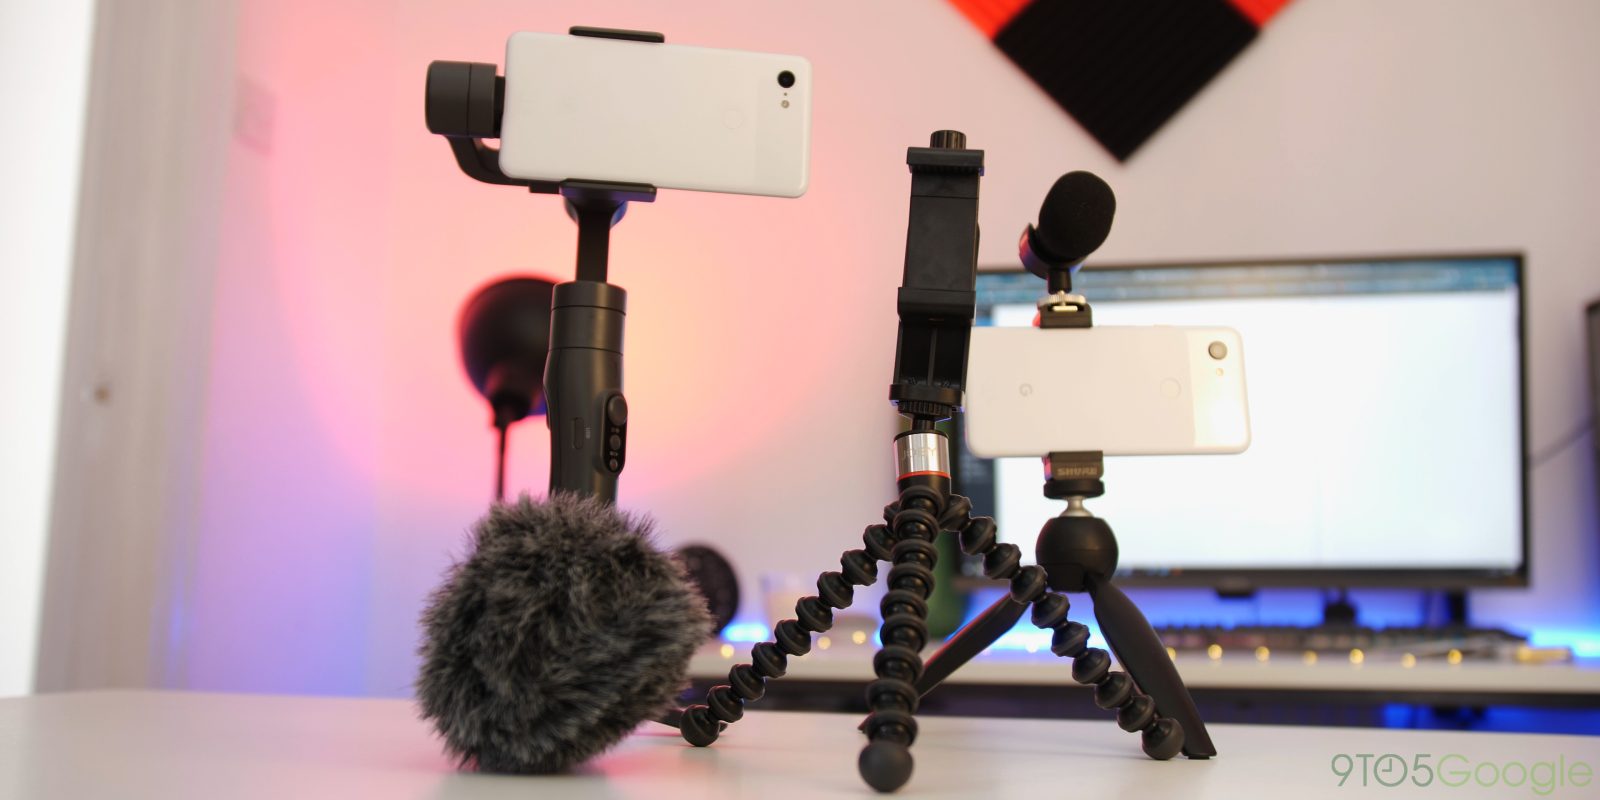 Pixel 3 video makers kit